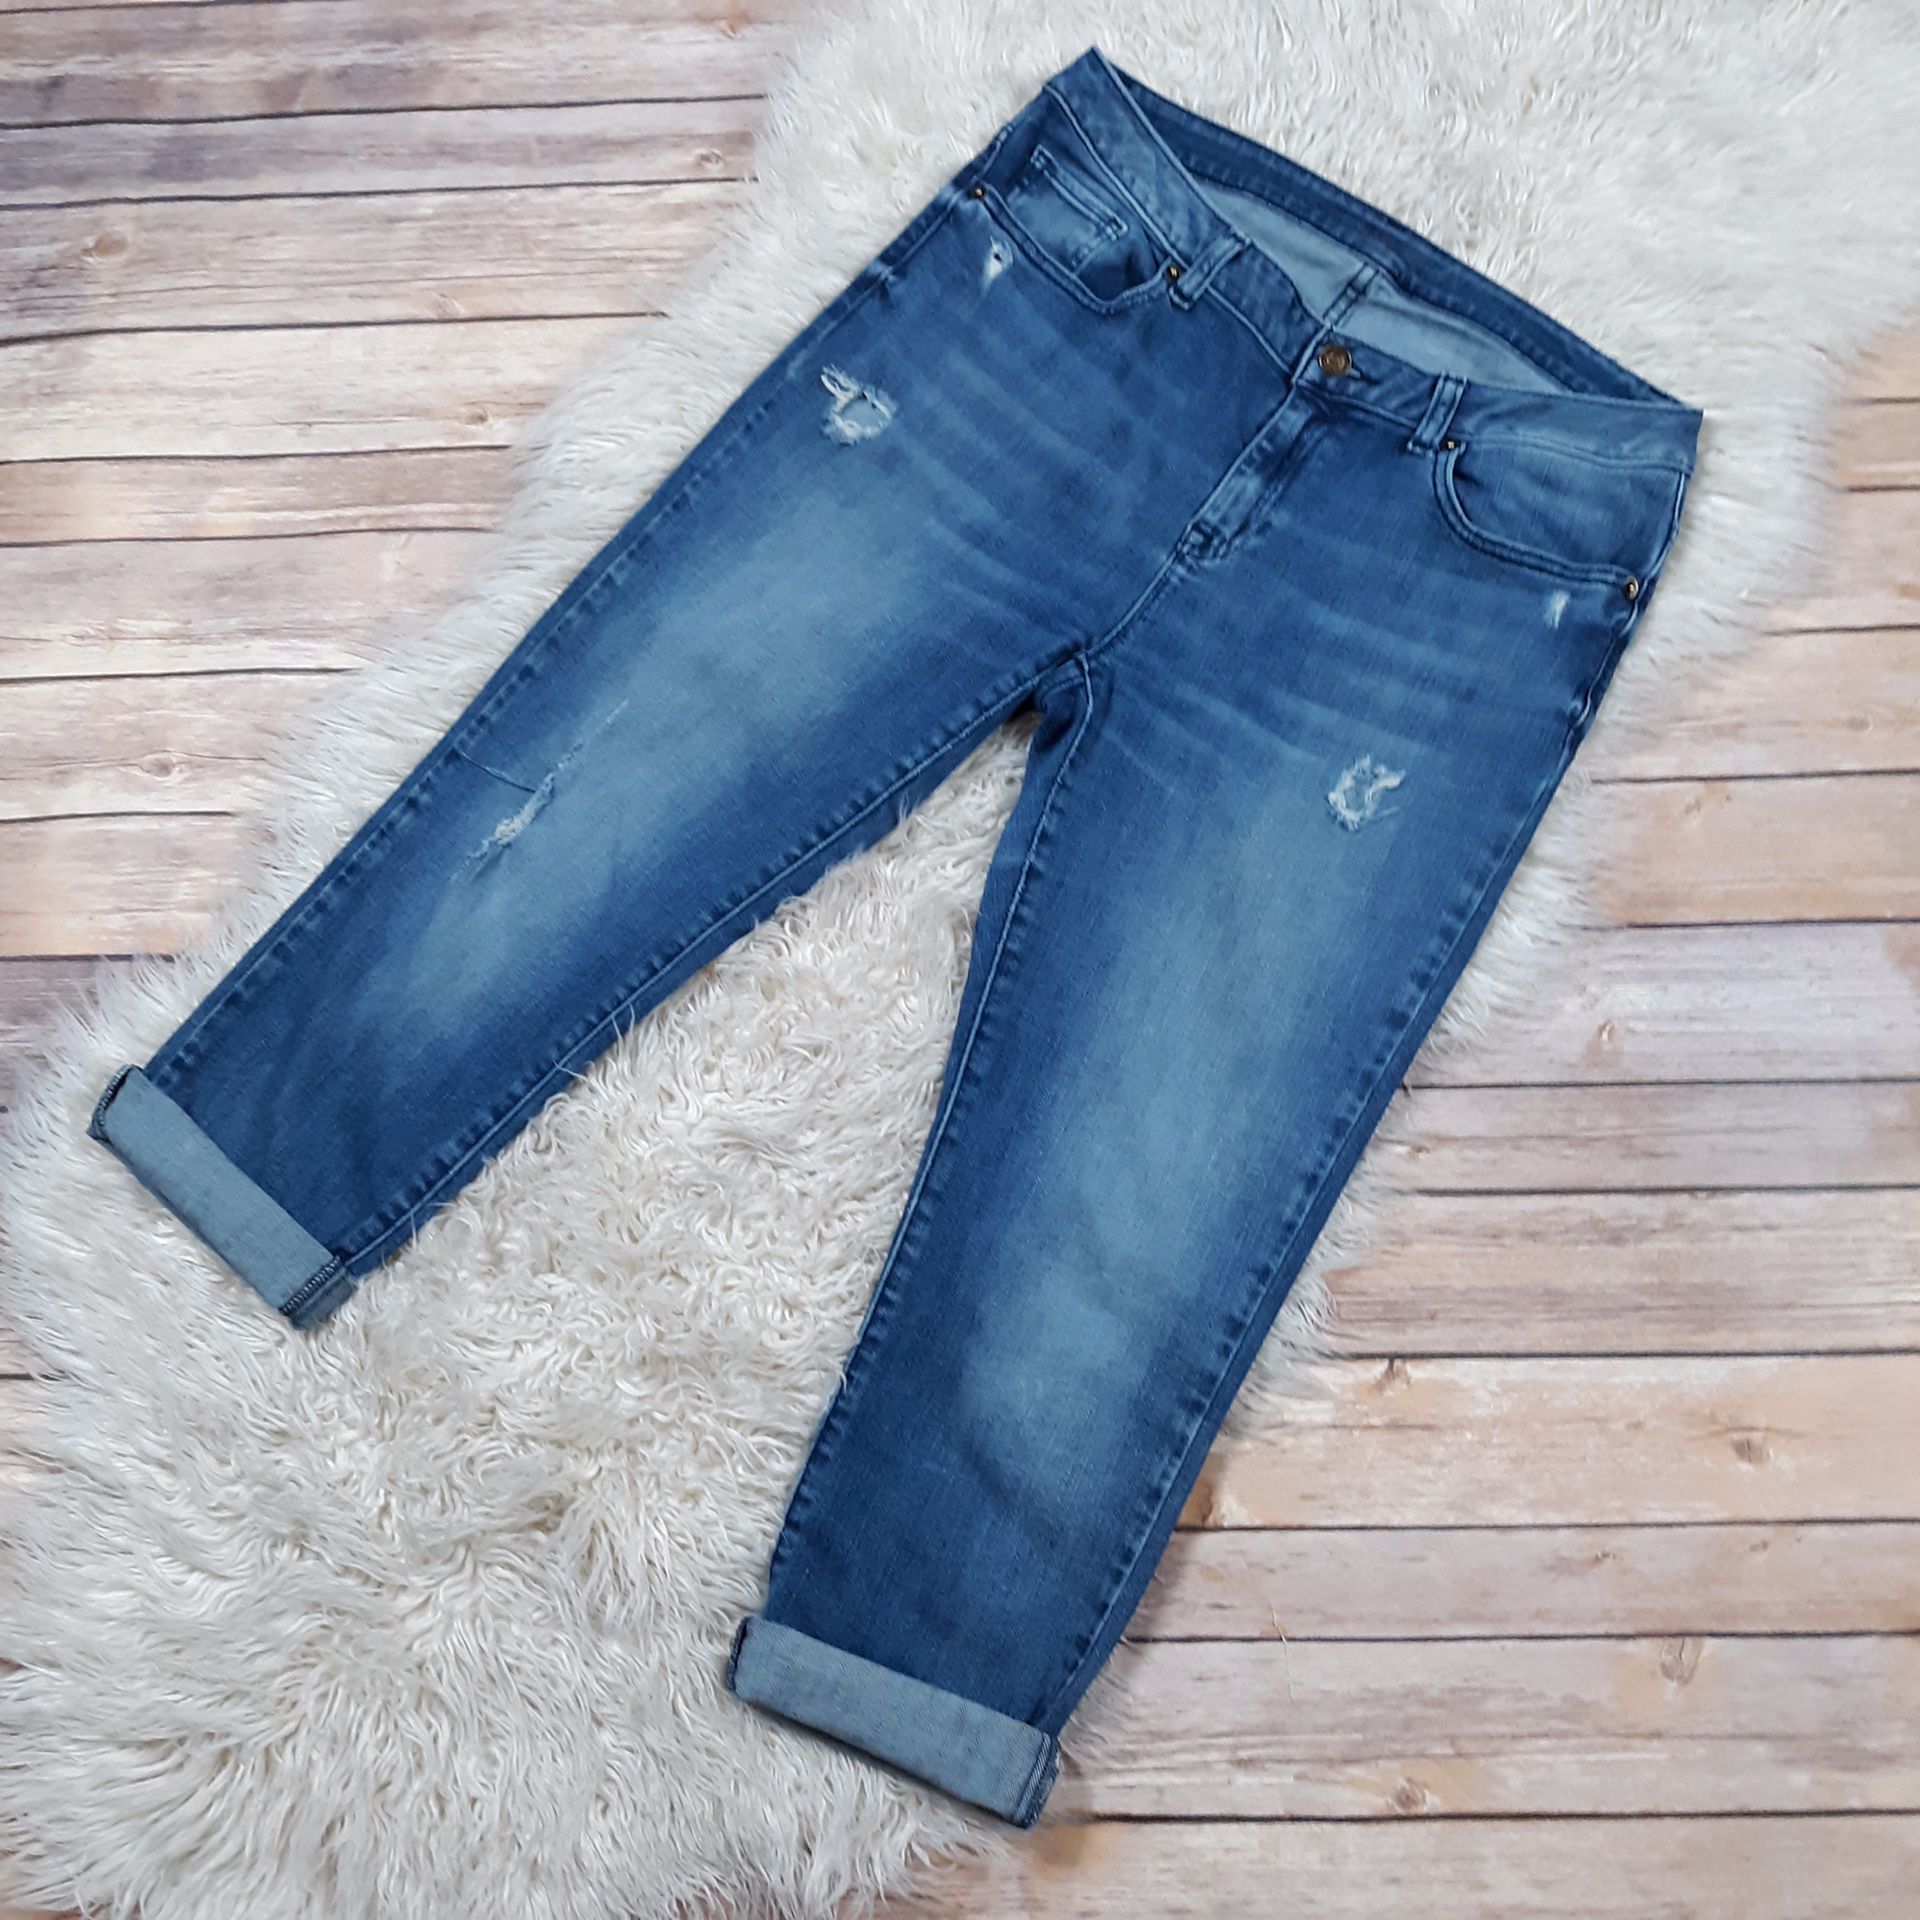 Michael Kors | Distressed Denim Cropped Jeans- SZ 6